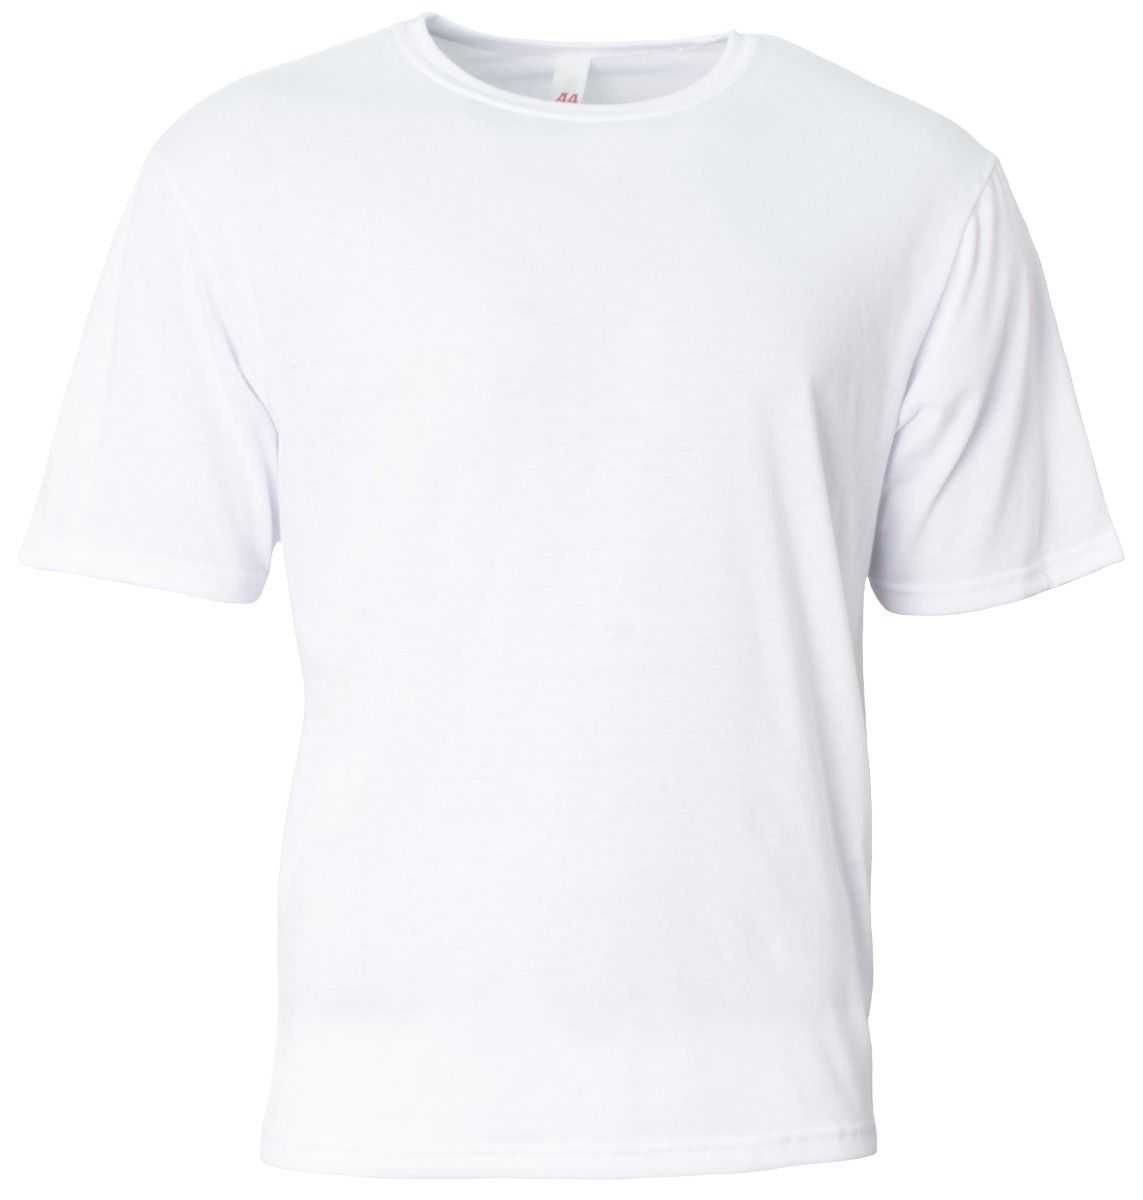 A4 N3013 Adult Softek T-Shirt - White - HIT a Double - 1